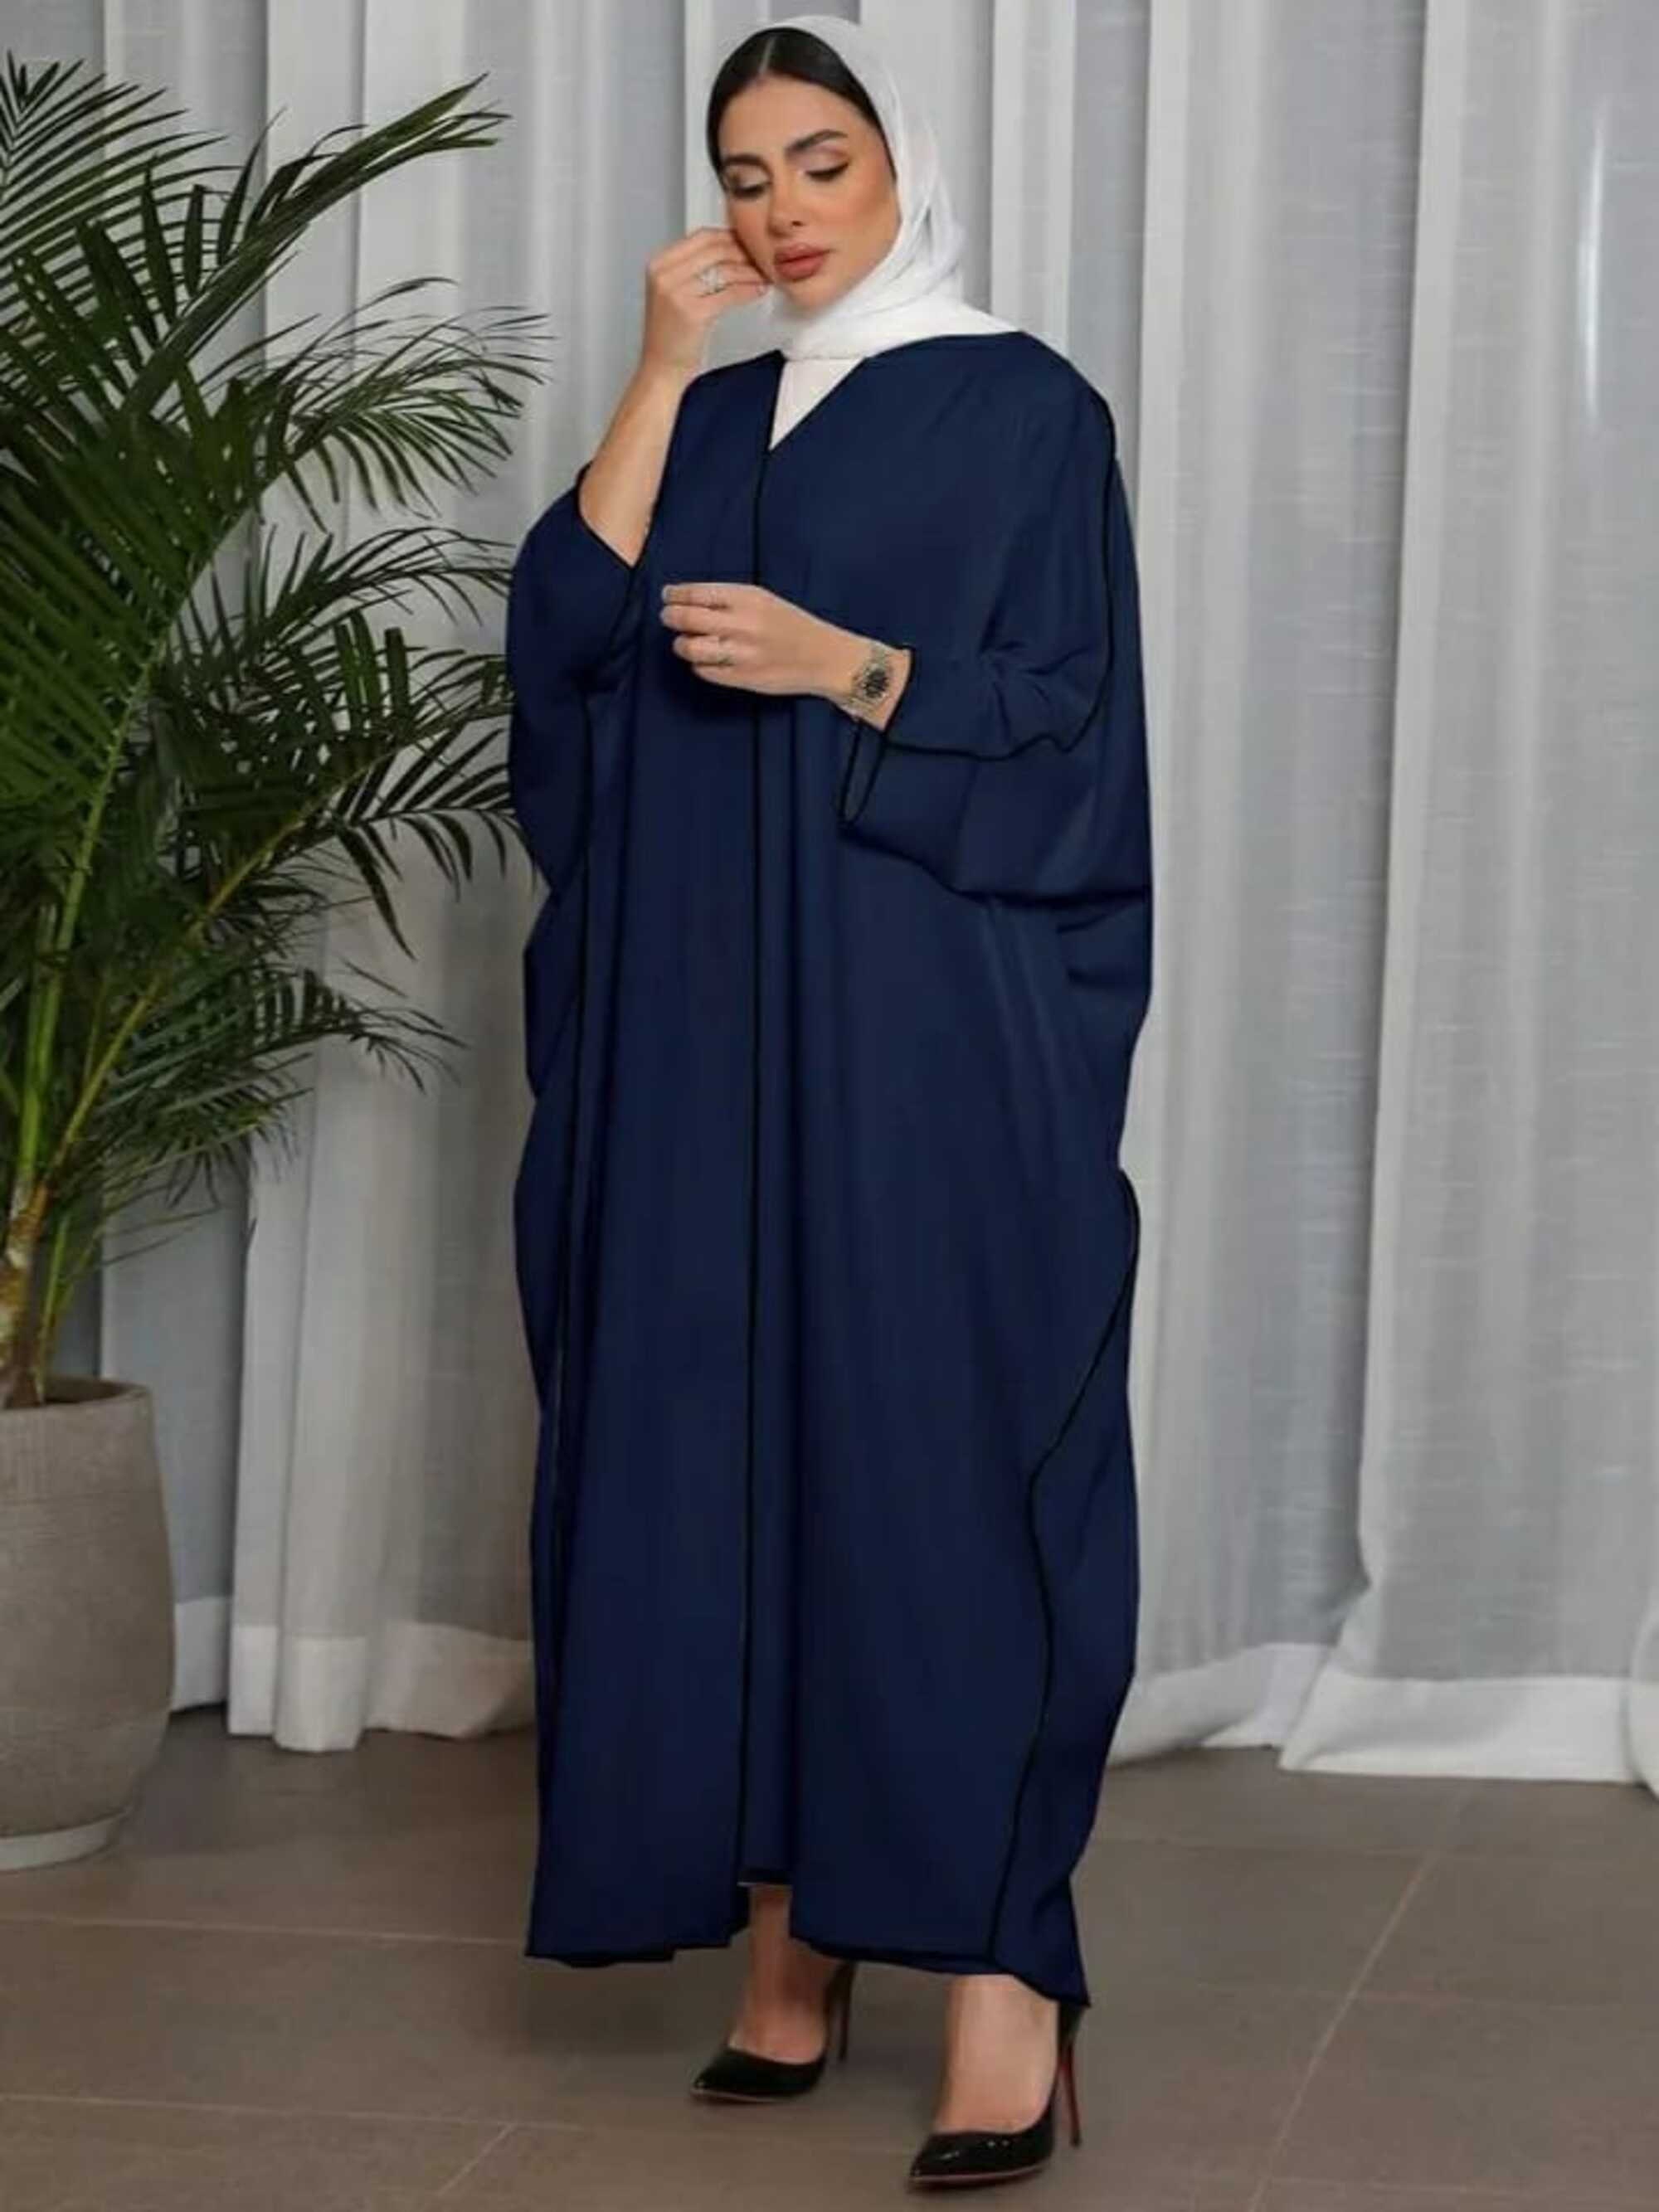 Sheer Abaya Kimono Dubai Arab Robe Muslim Hijabi Outfit - Etsy